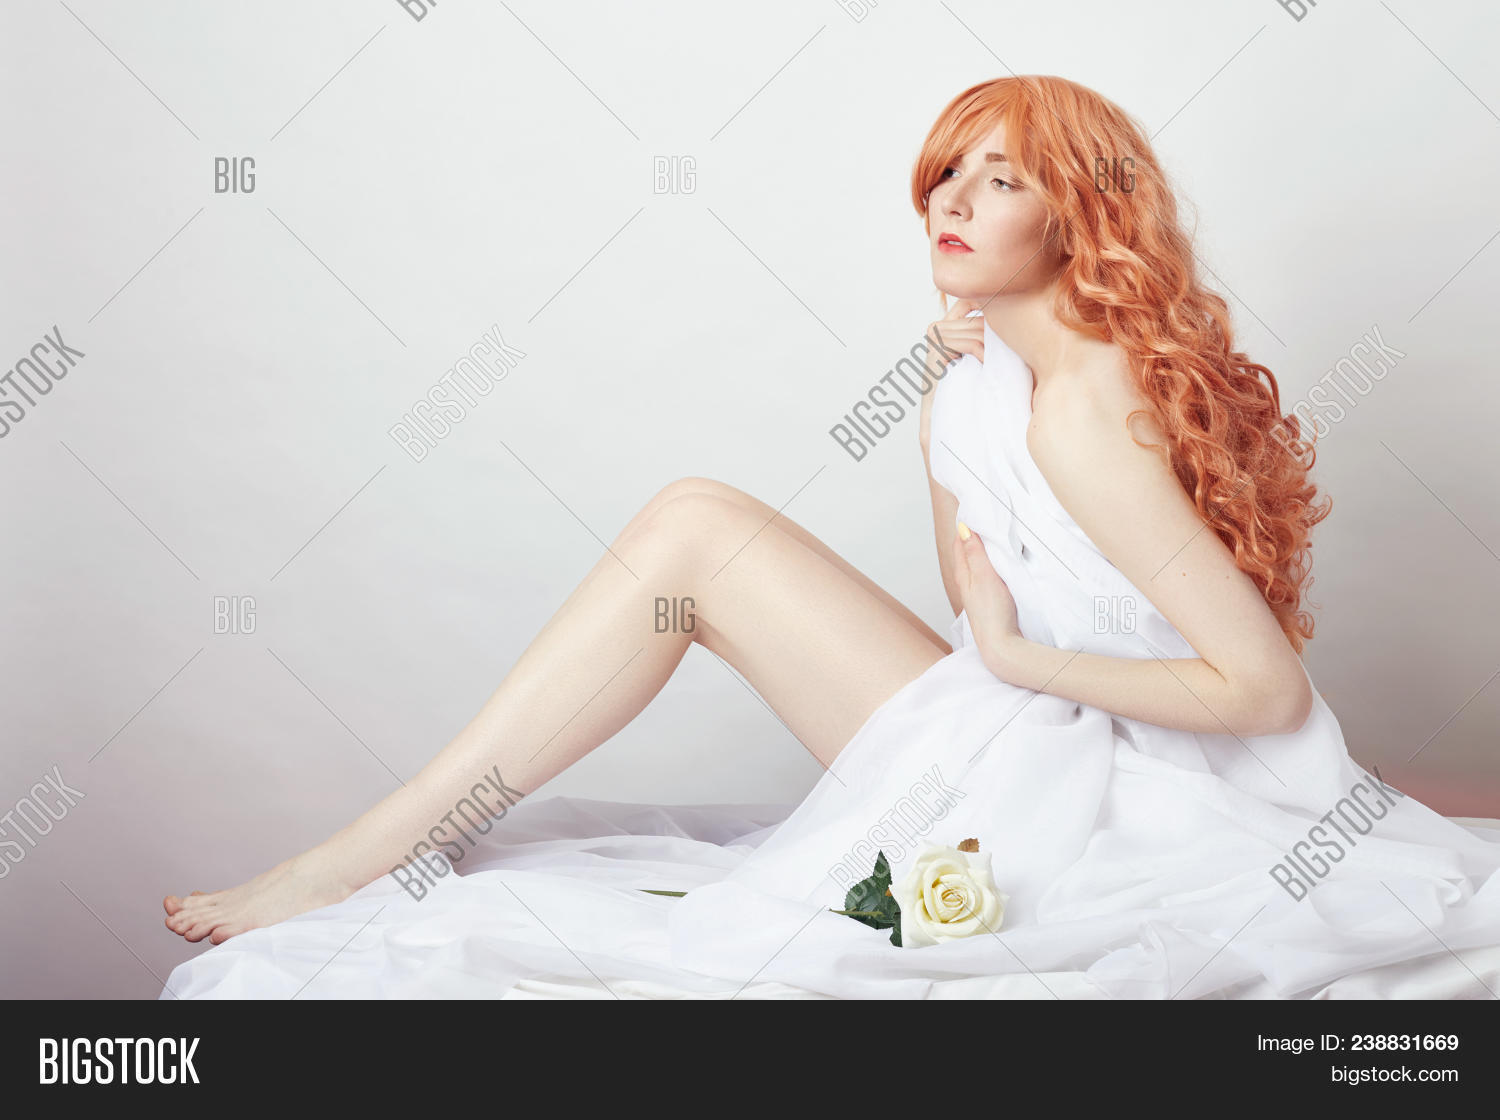 brett amick share hot redhead naked female sitting photos